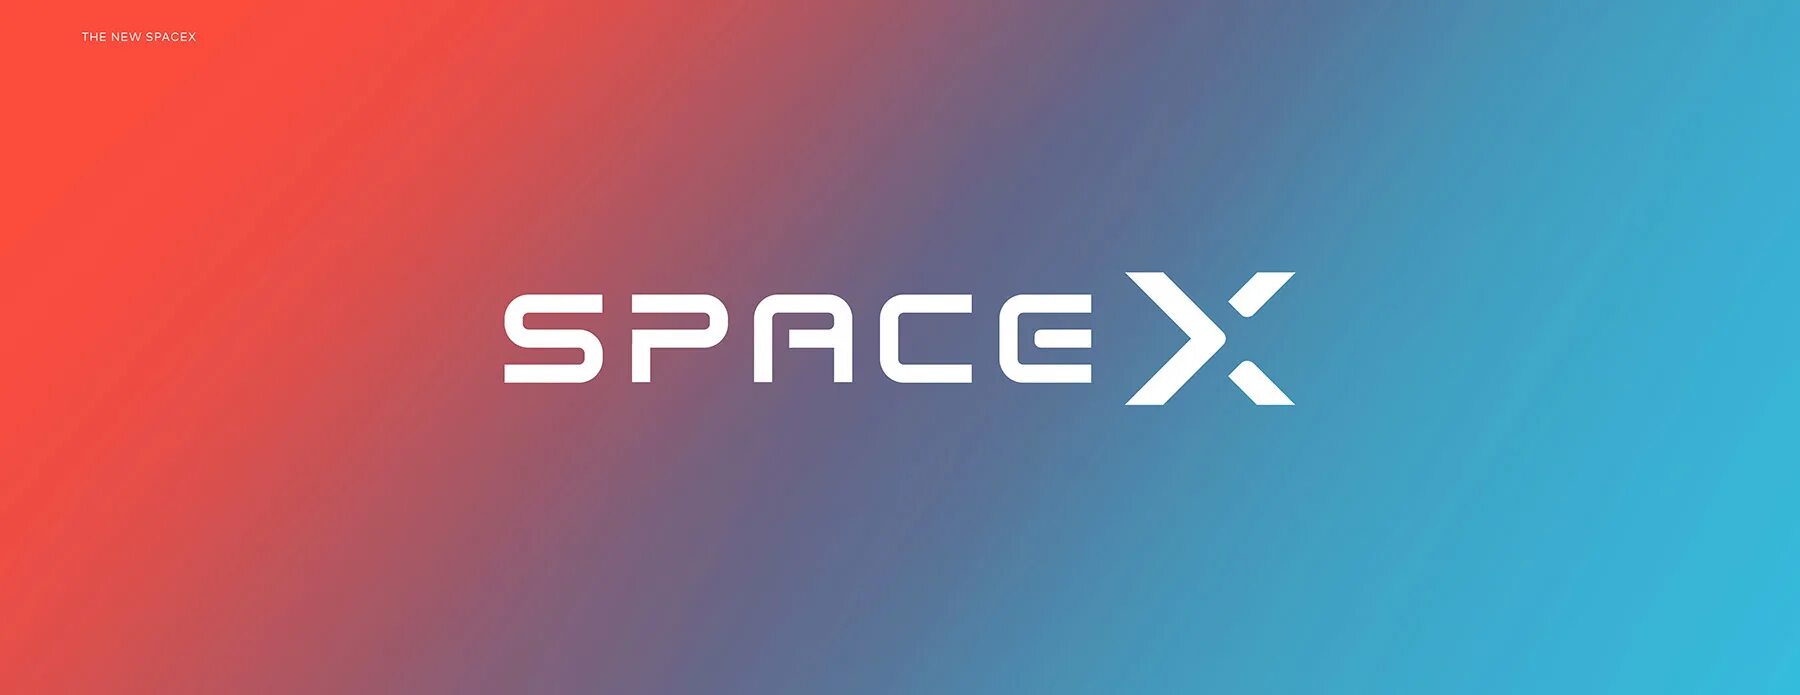 Спасис обмена. Спейс х лого. Space x лого. SPACEX ава. SPACEX надпись.